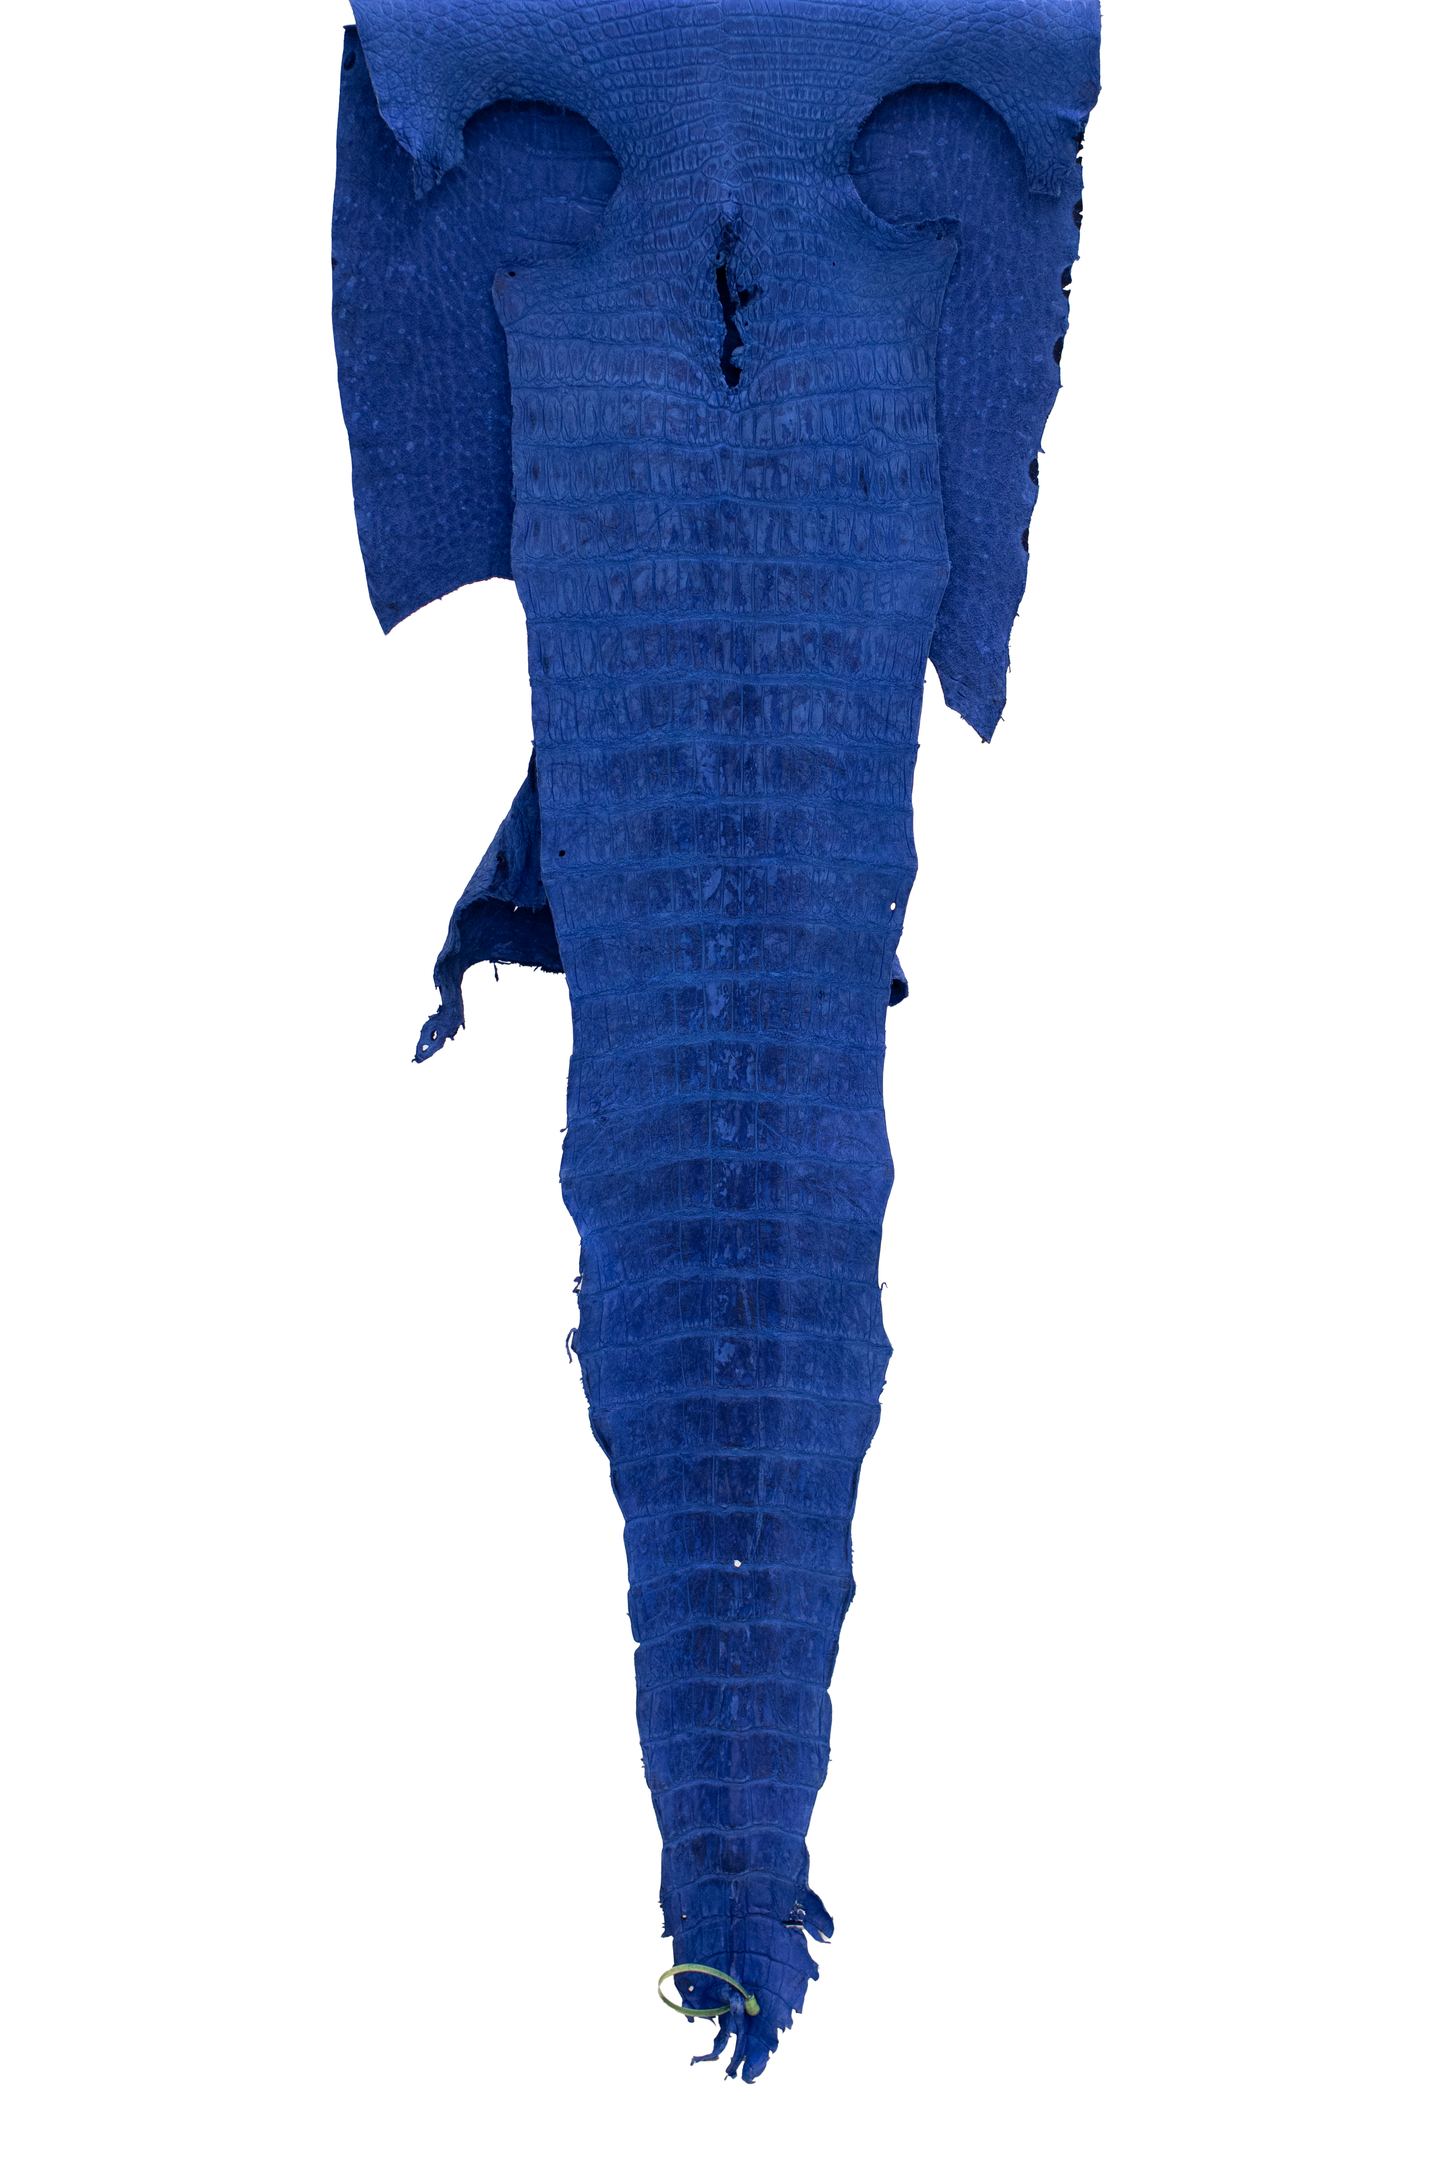 58 cm Grade 3/4 Navy Blue Nubuck Wild American Alligator Leather - Tag: FL22-0013366